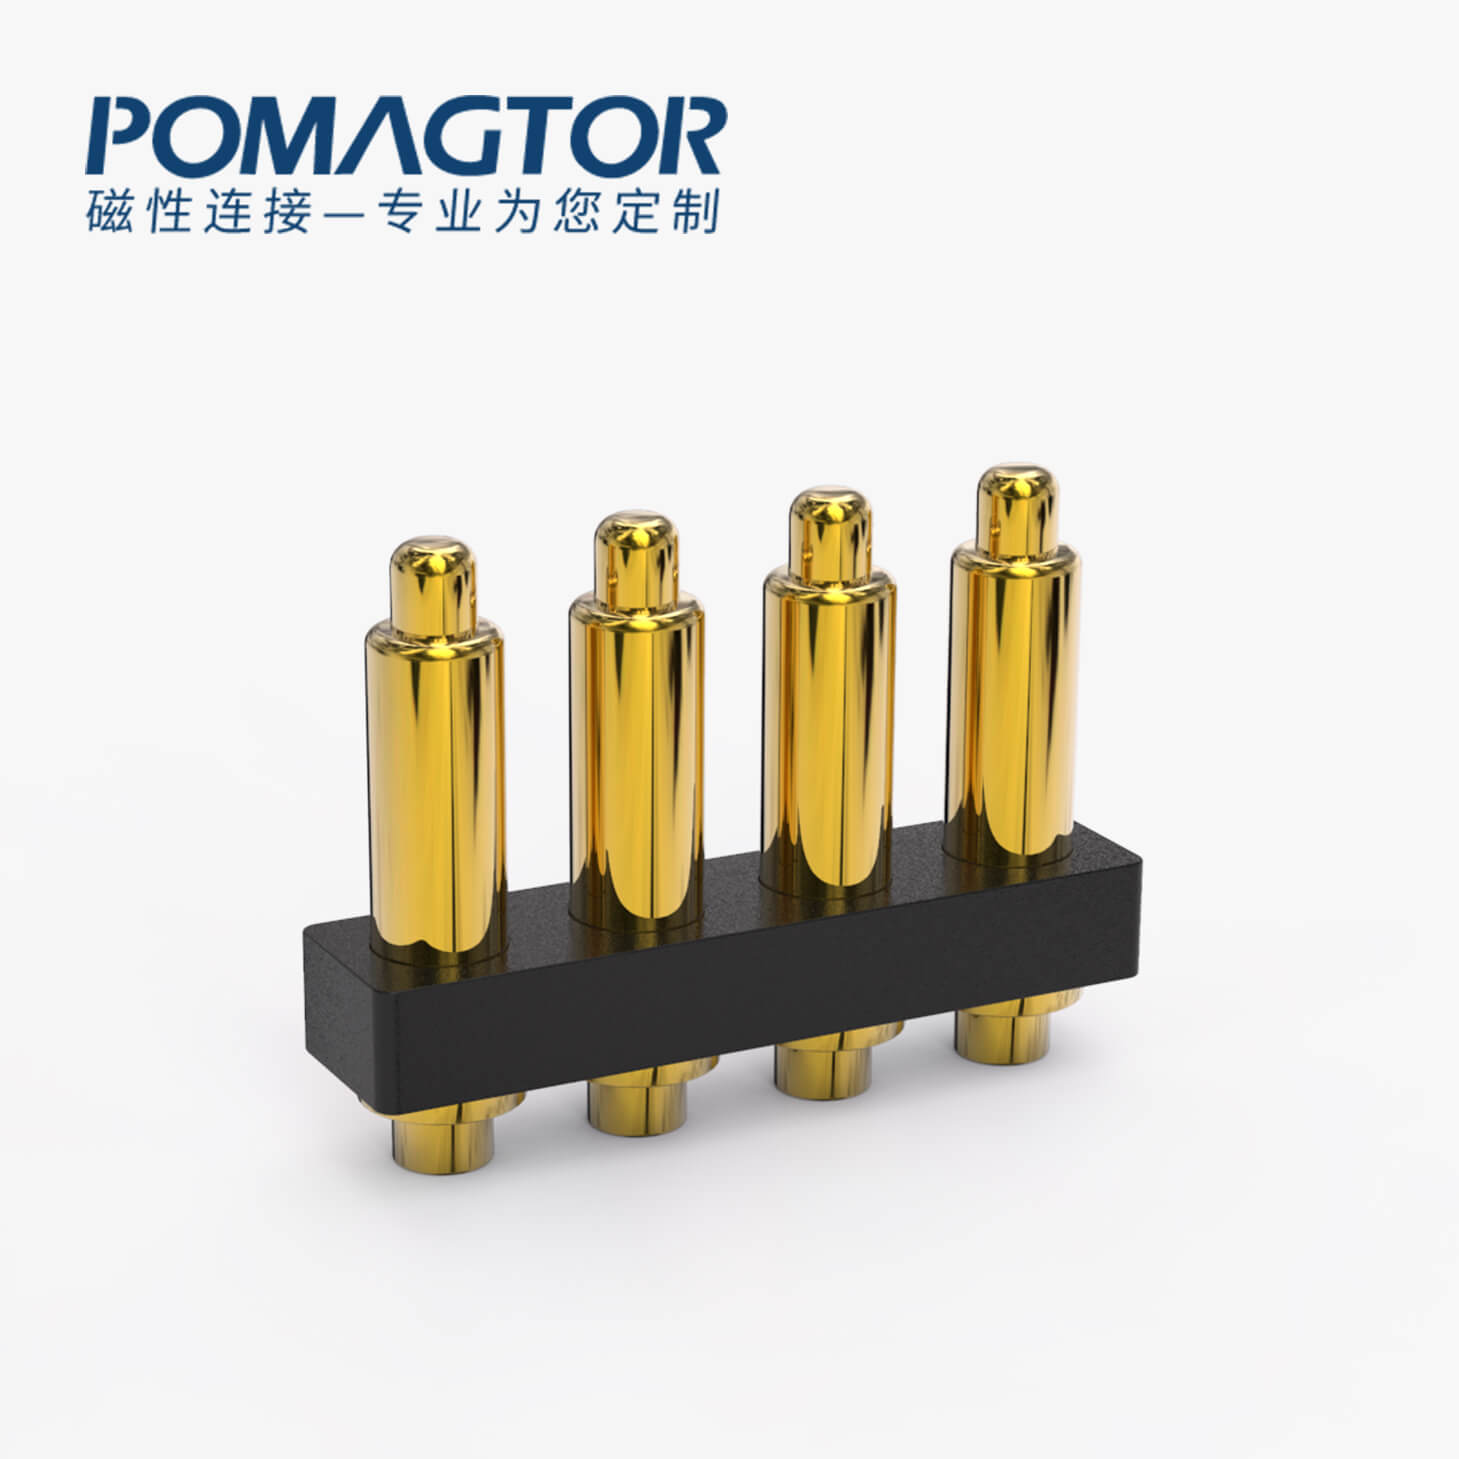 POGO PIN连接器 DIP式：4PIN，电镀黄铜Au3u，电压12V，电流1A，工作行程0.6mm:60gfMax，弹力30000次+，工作温度-30°~85°